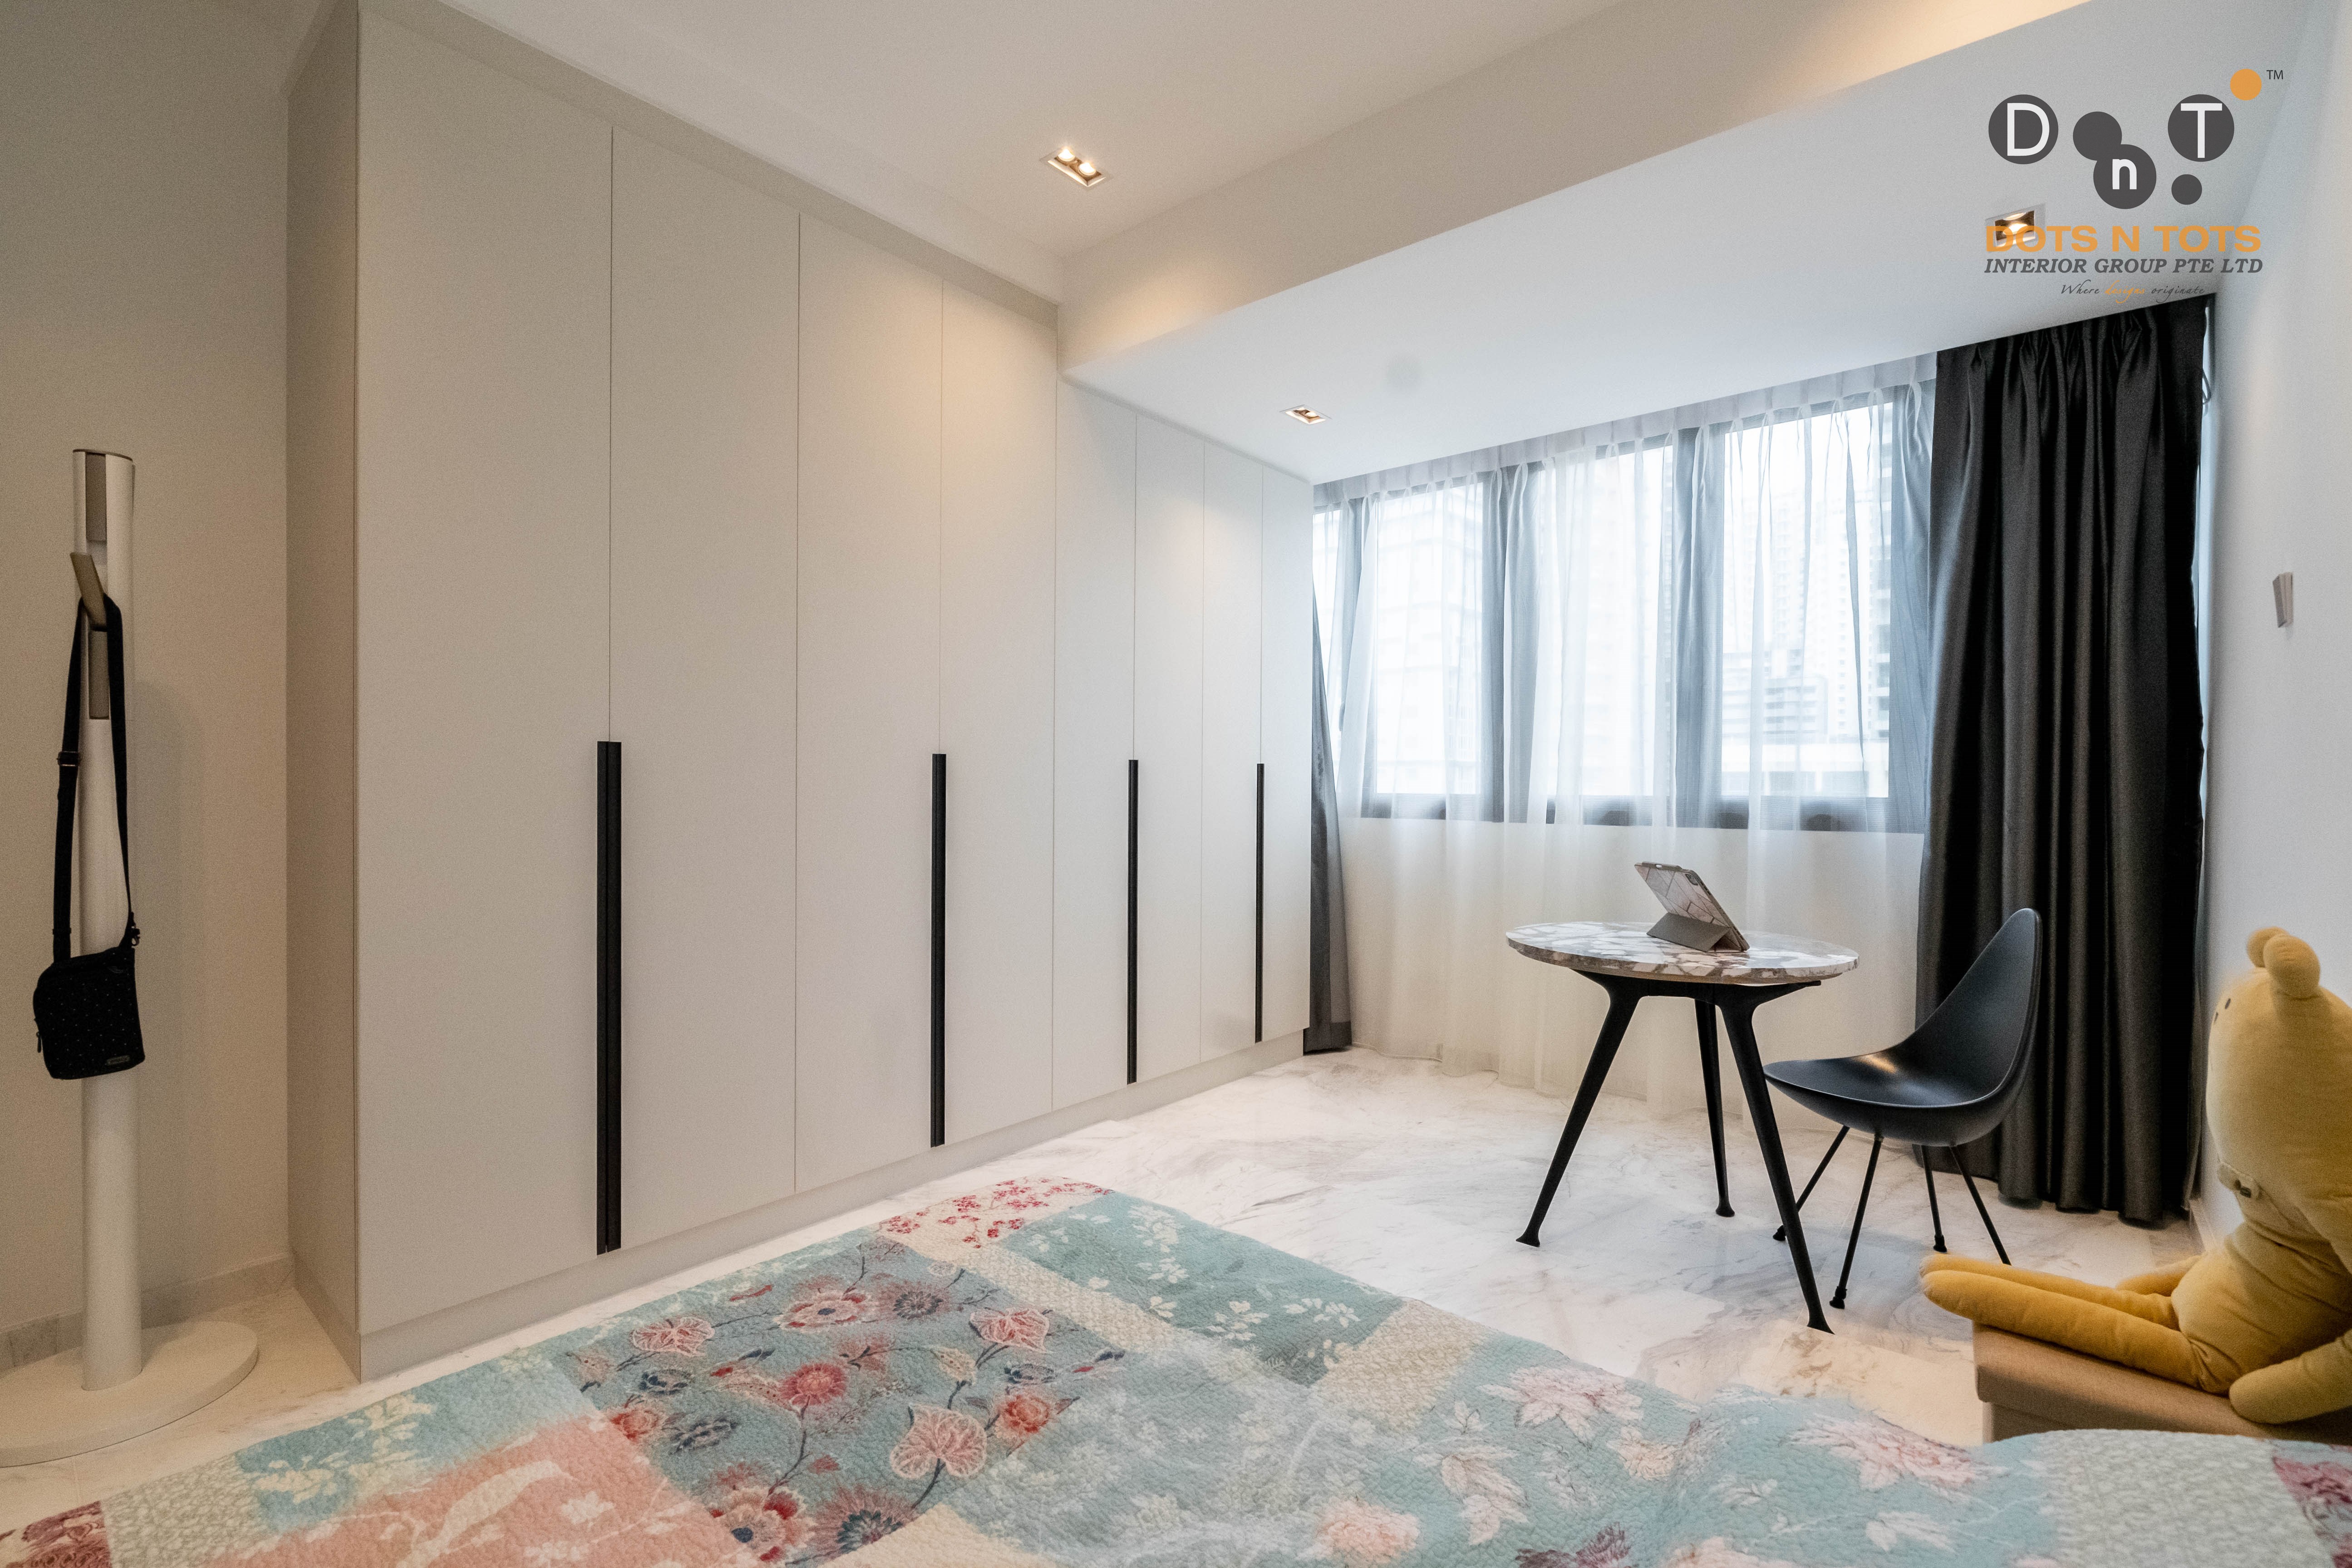 Contemporary, Modern Design - Bedroom - Condominium - Design by Dots n Tots Interior Pte Ltd